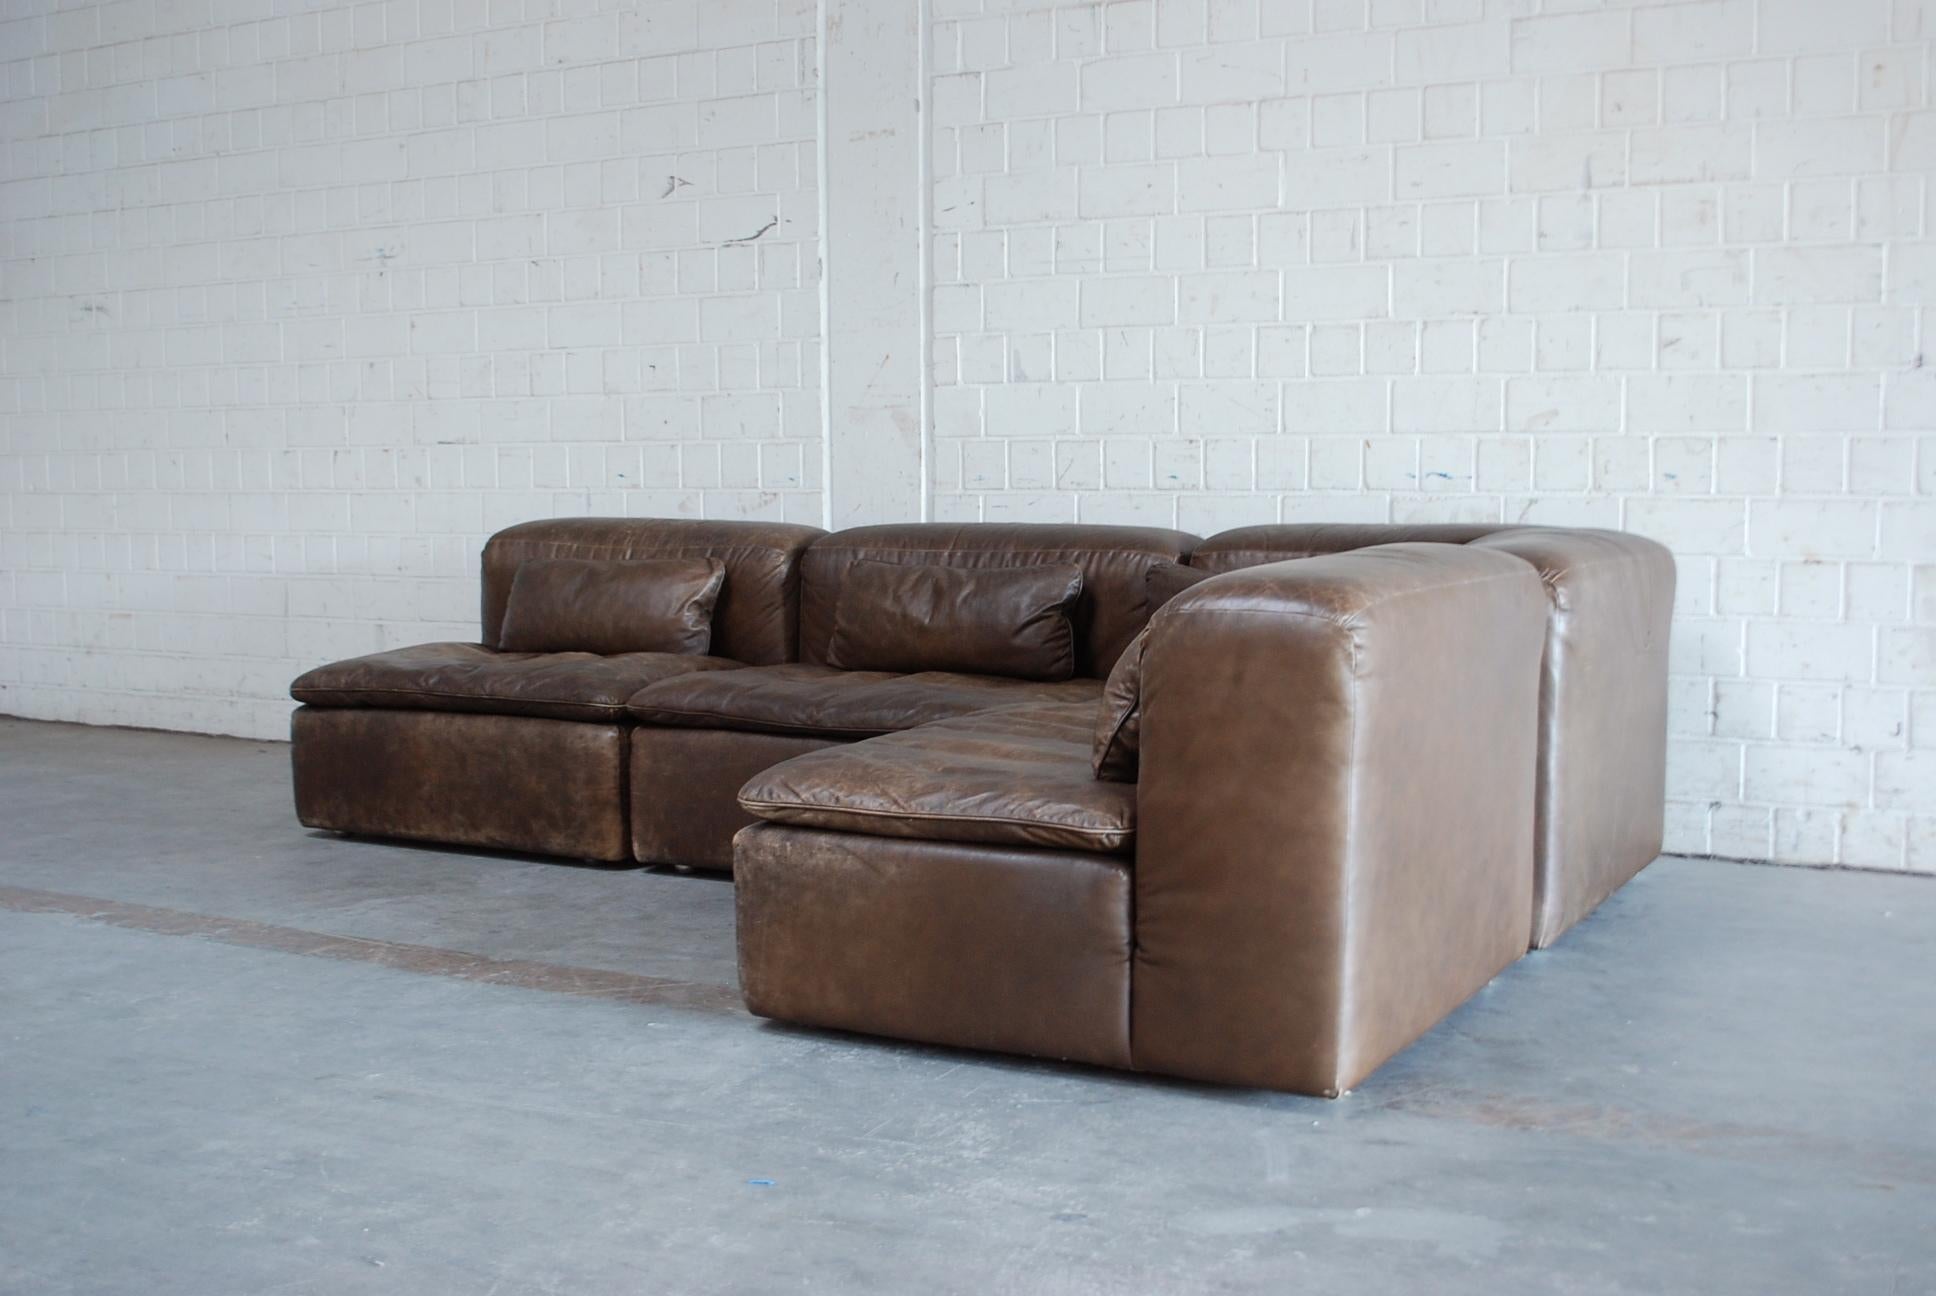 wk sofa